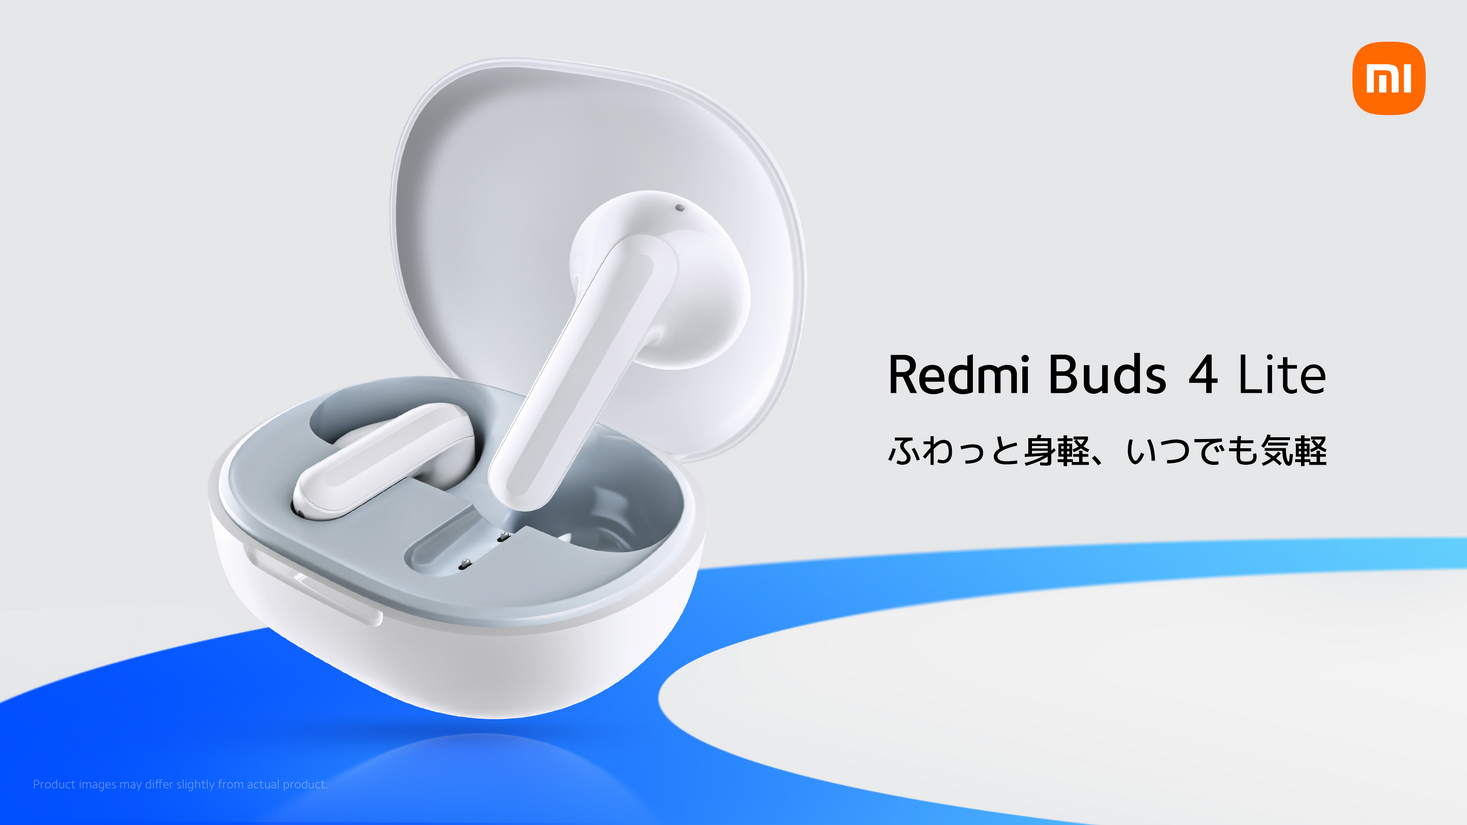 Xiaomiから”2,480円で超軽量”な高コスパワイヤレスイヤホン「Redmi Buds 4 Lite」